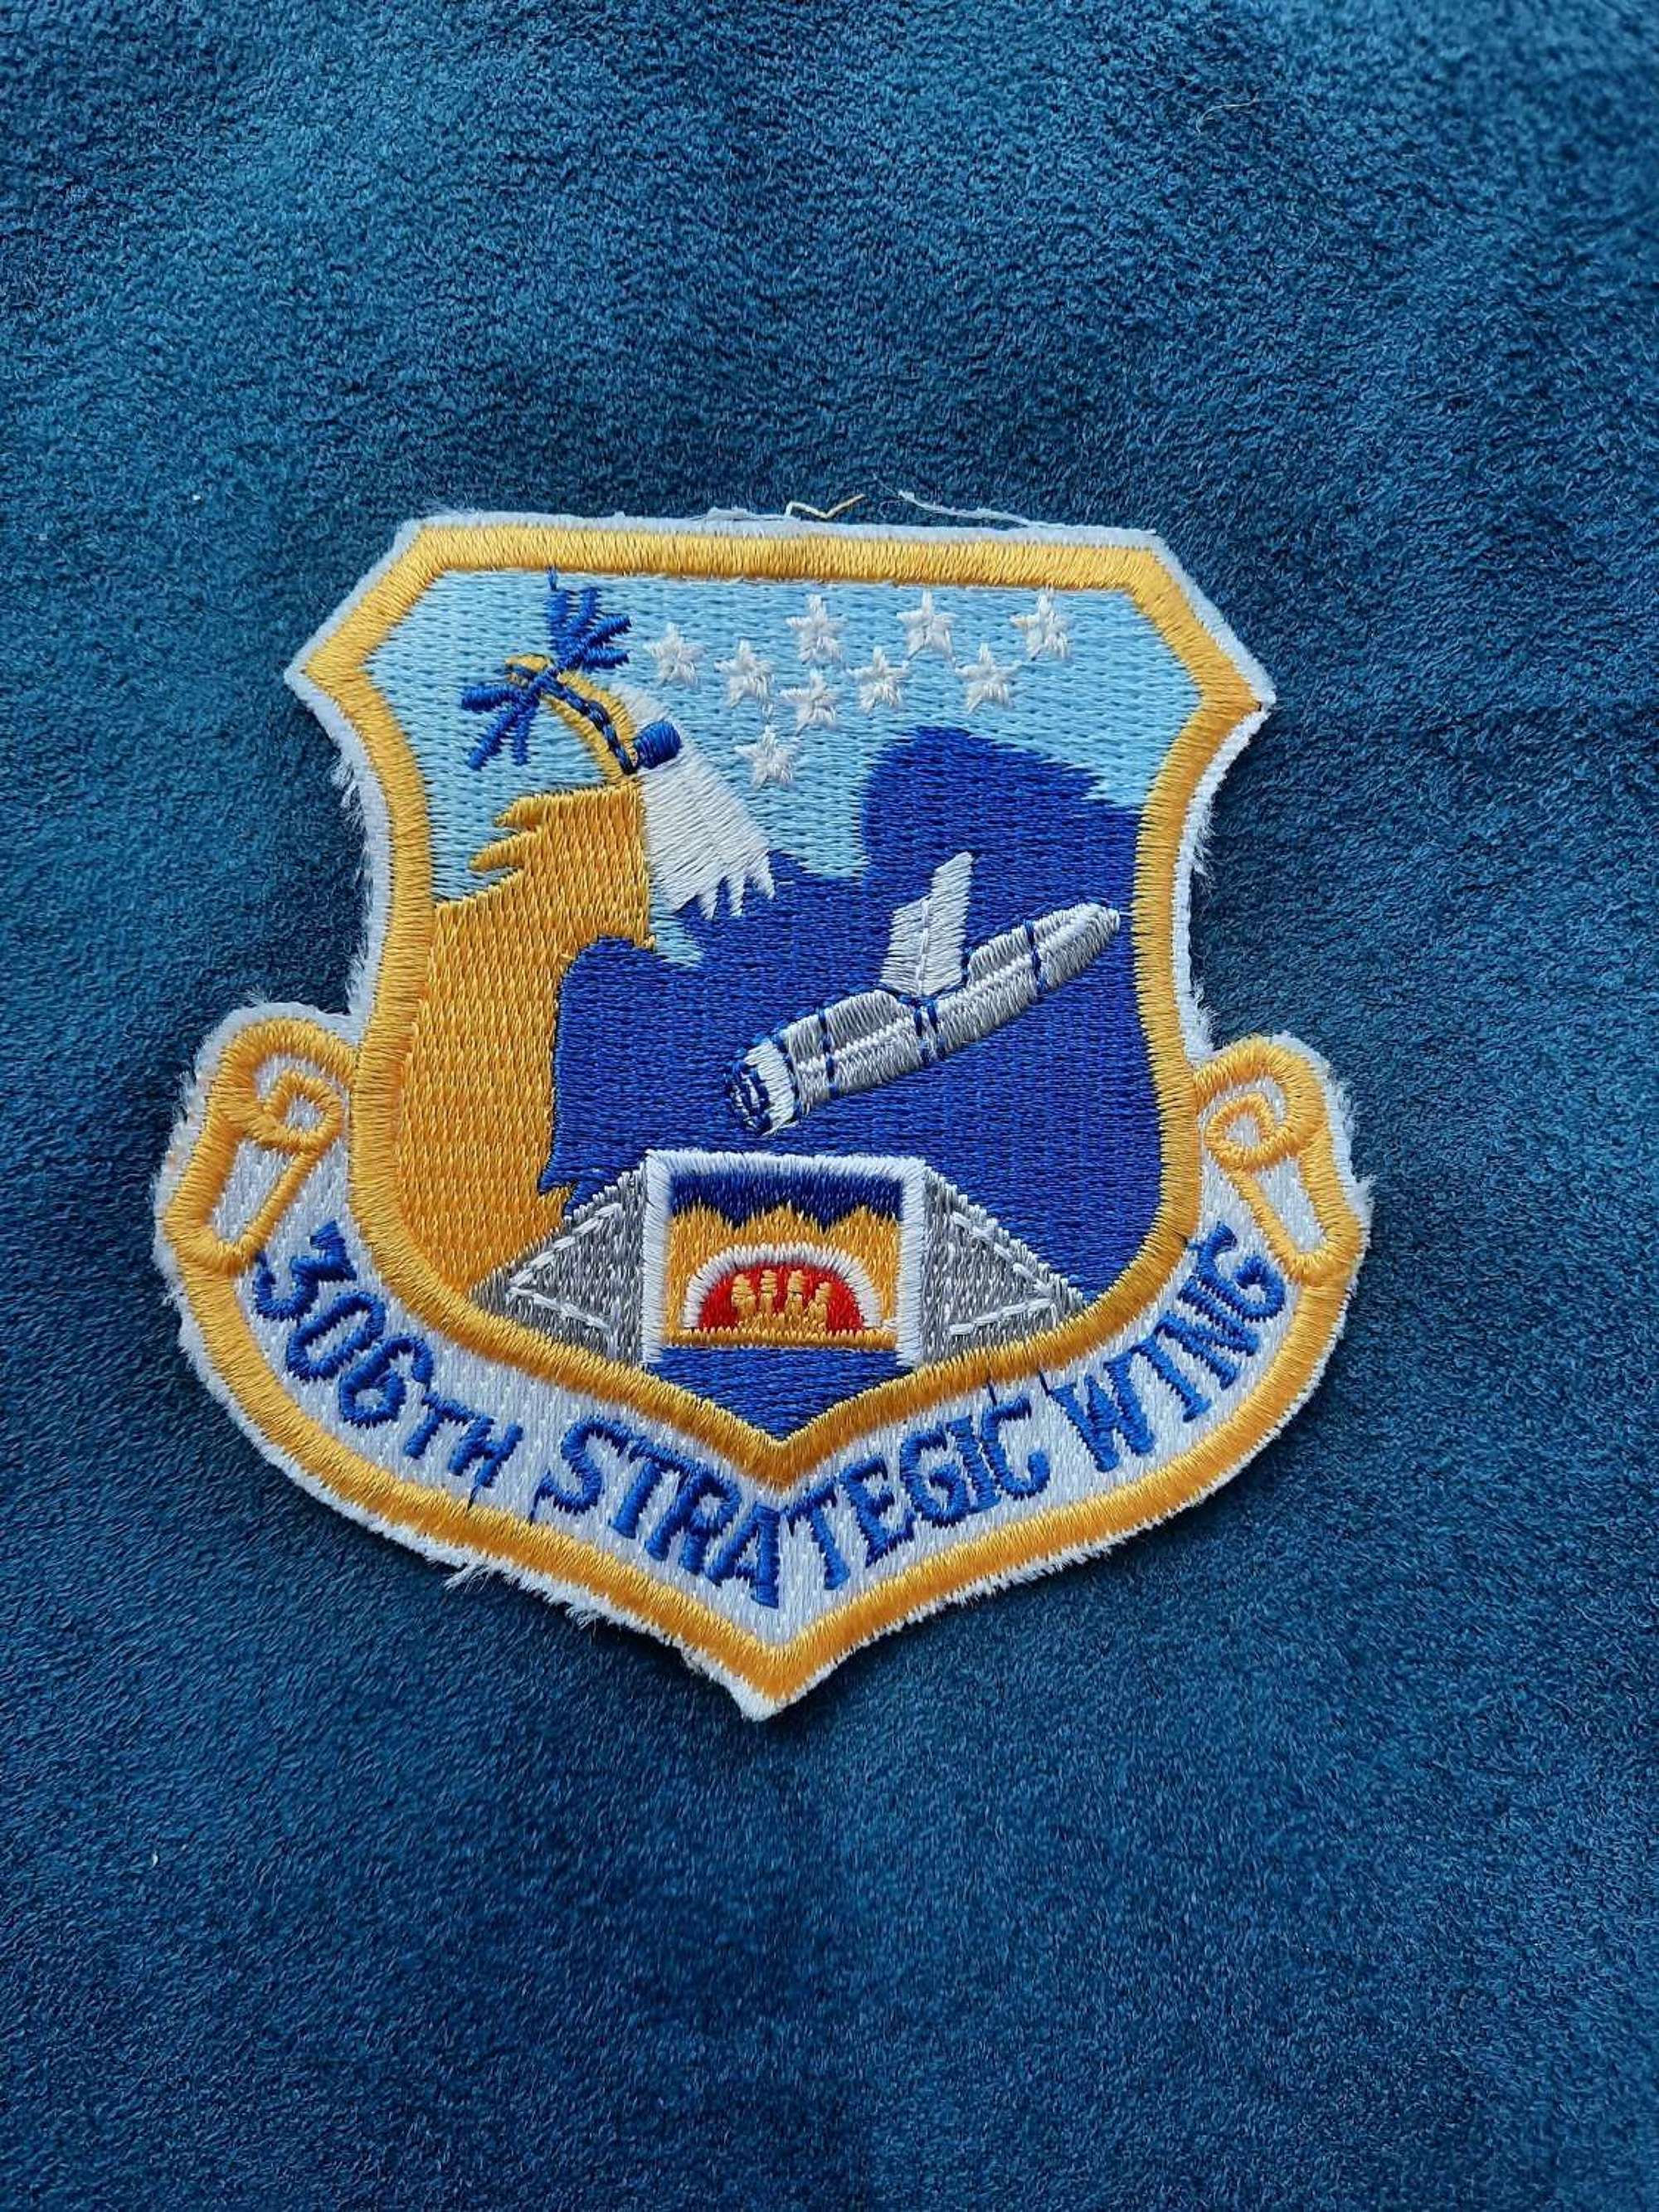 USAF 306th Strategic Wing Patch